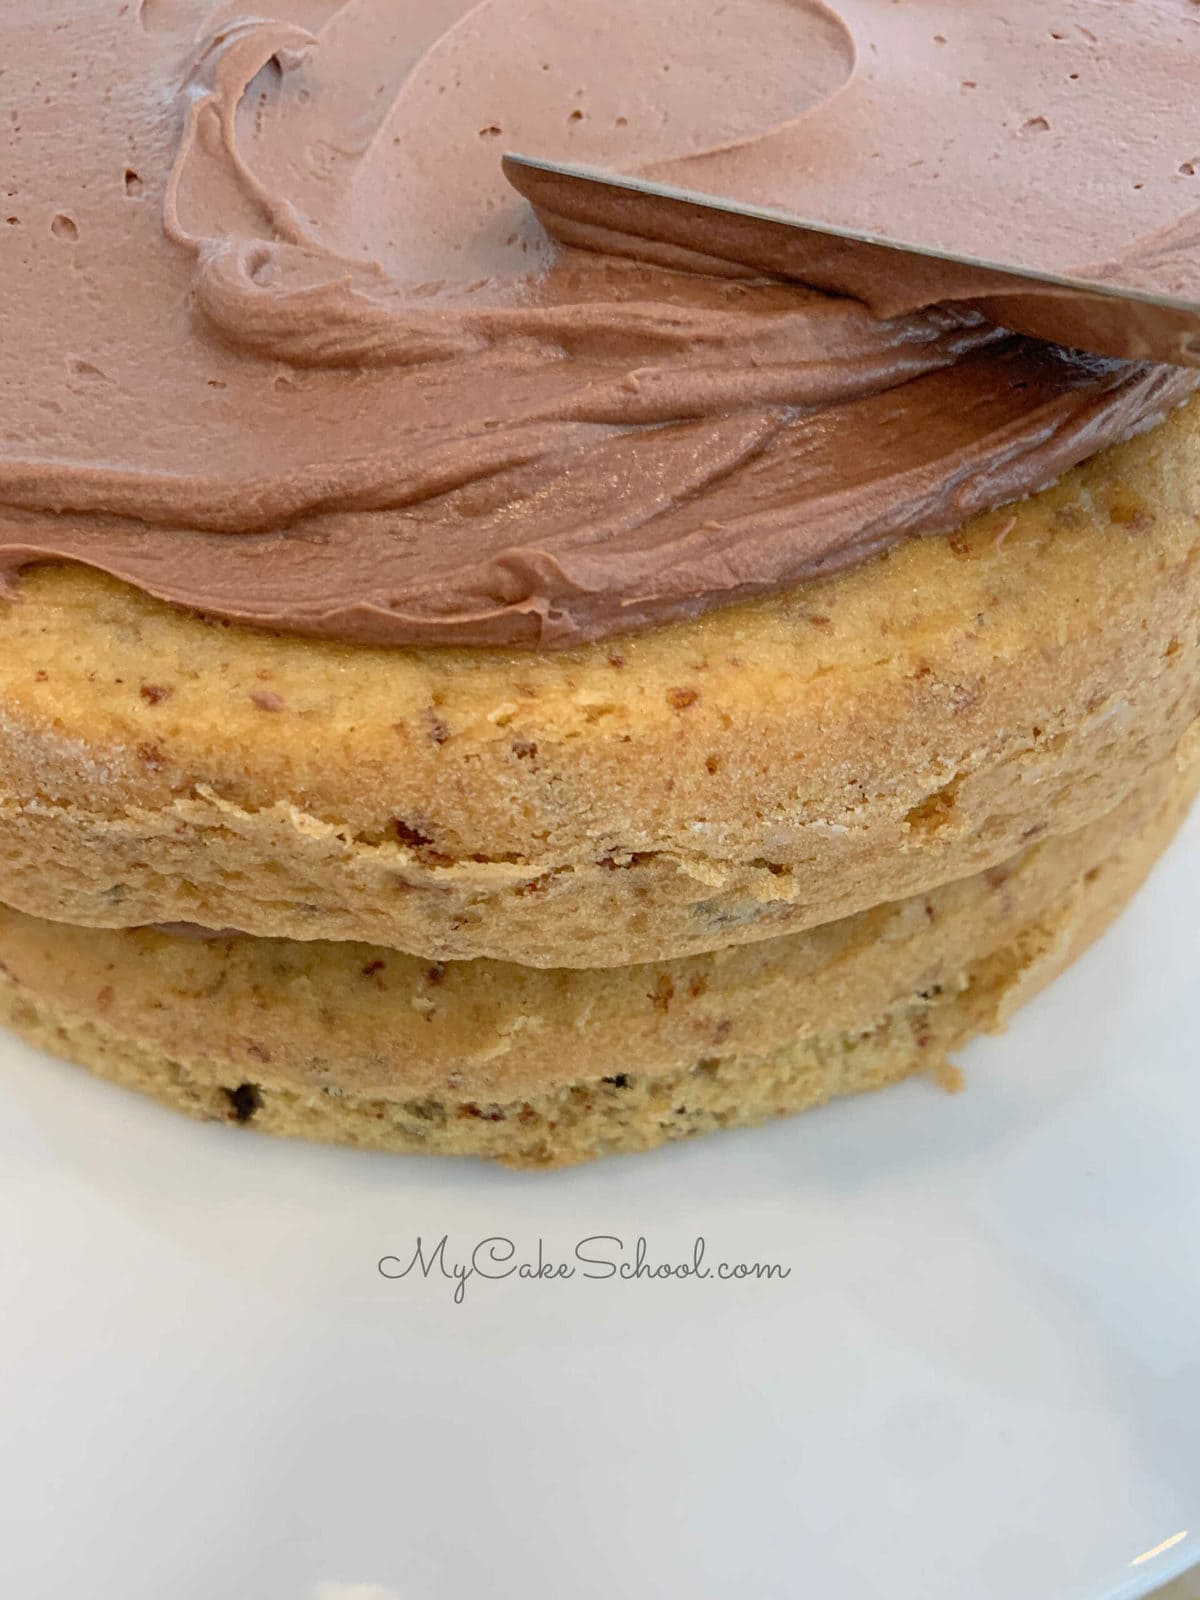 Chocolate Chip Pecan Cake- A Doctored Cake MIx Recipe